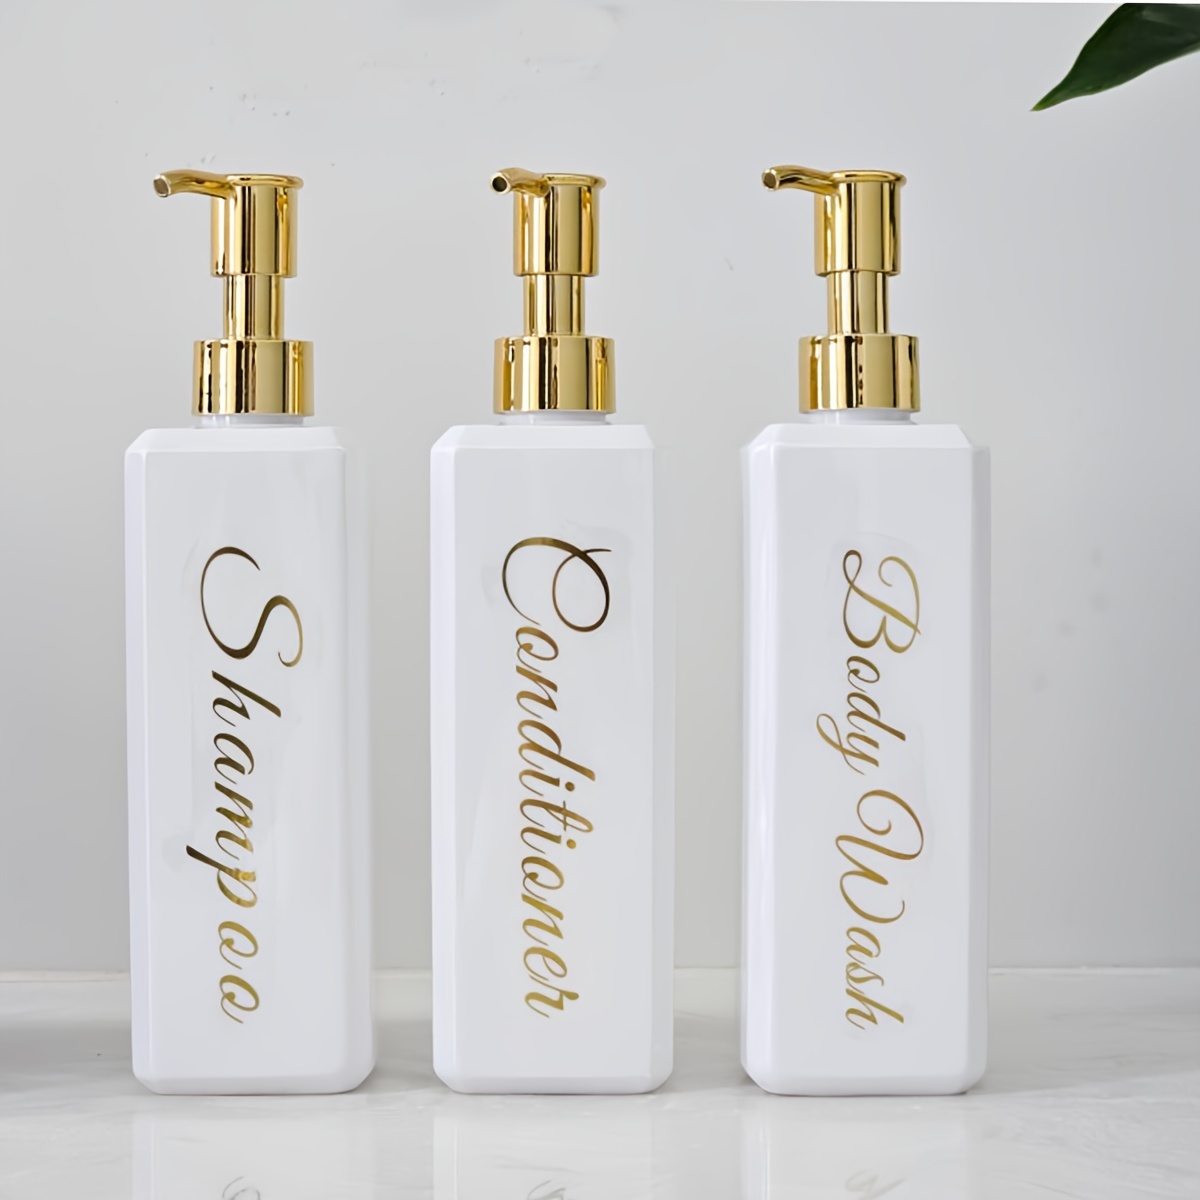 

3-piece Luxury Golden Shampoo & Conditioner Dispenser Set - Bpa-free, Fragrance-free Plastic Pump Bottles For Bathroom Essentials Bathroom Accessories Shampoo And Conditioner Dispenser